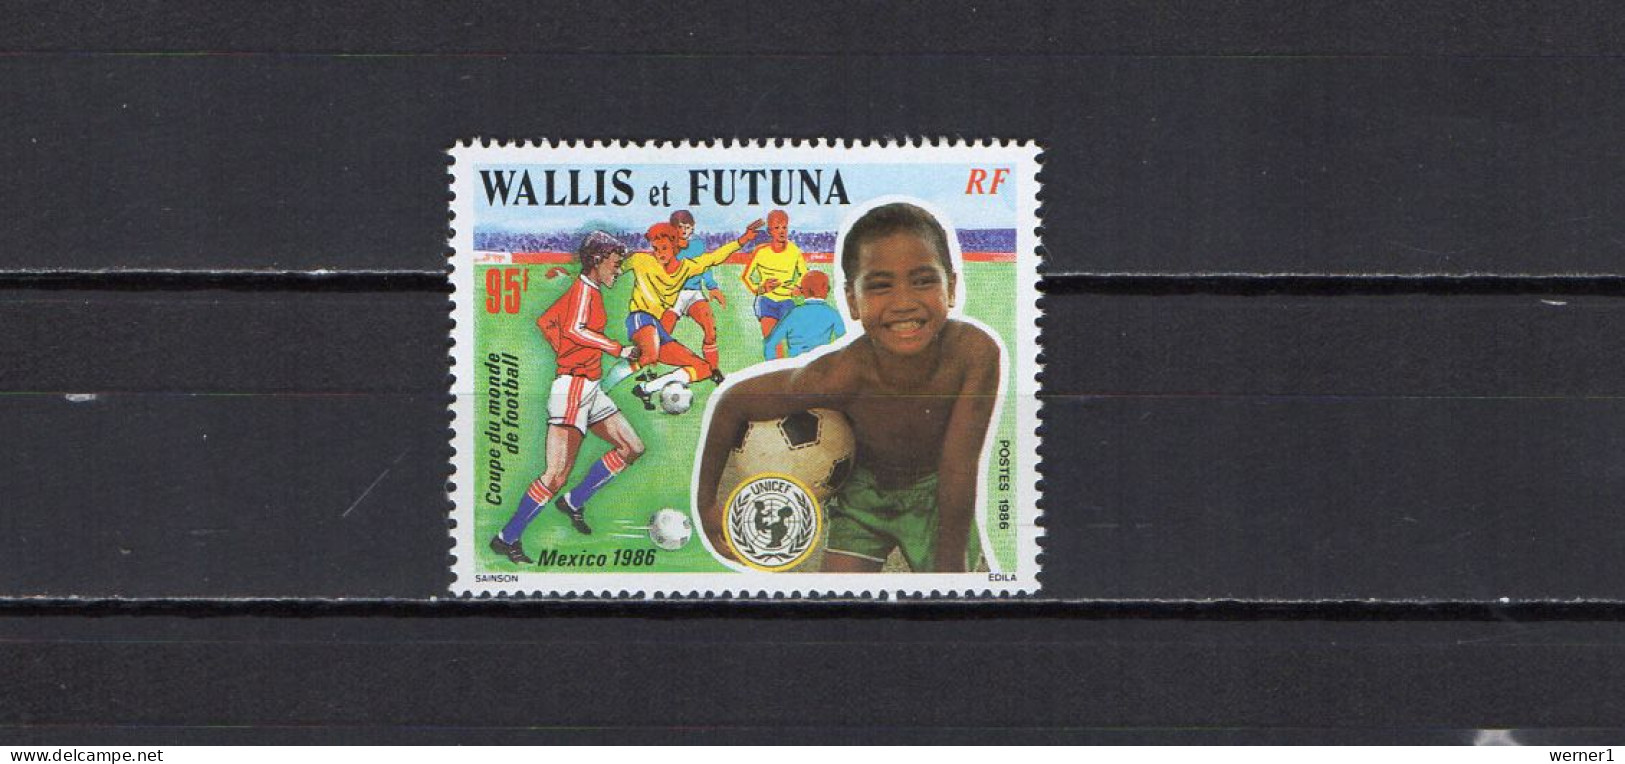 Wallis & Futuna 1986 Football Soccer World Cup Stamp MNH - 1986 – Mexiko